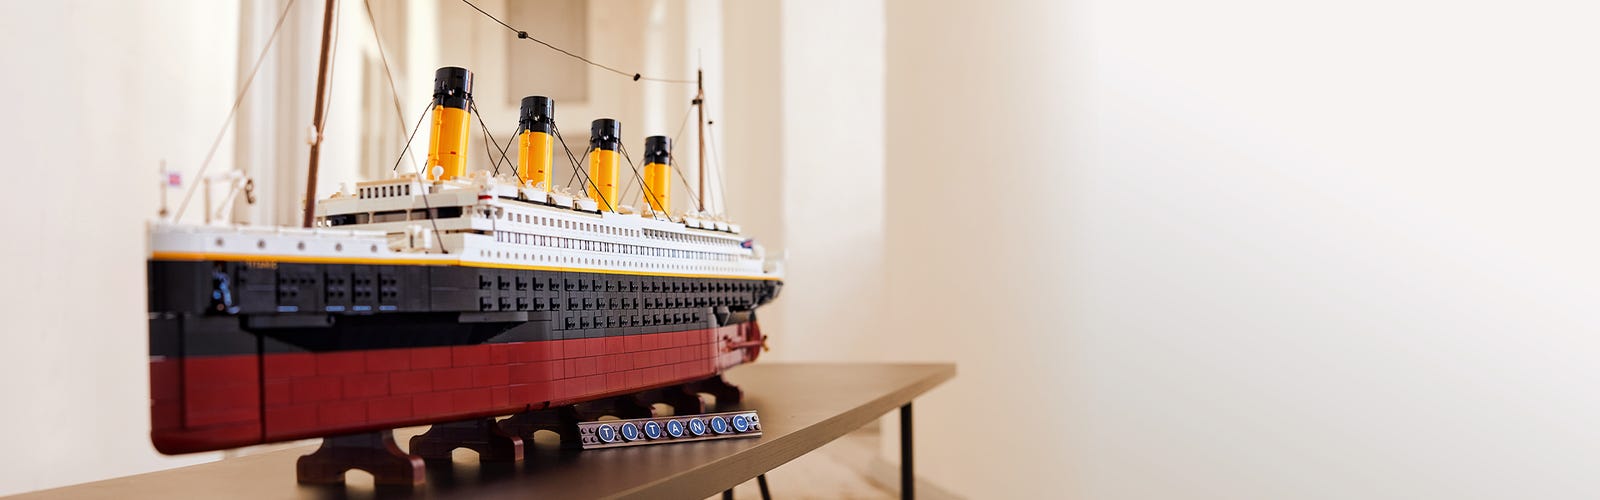 LEGO Icons: Titanic - 9090 Piece Building Kit [LEGO, #10294, Ages 18+] 